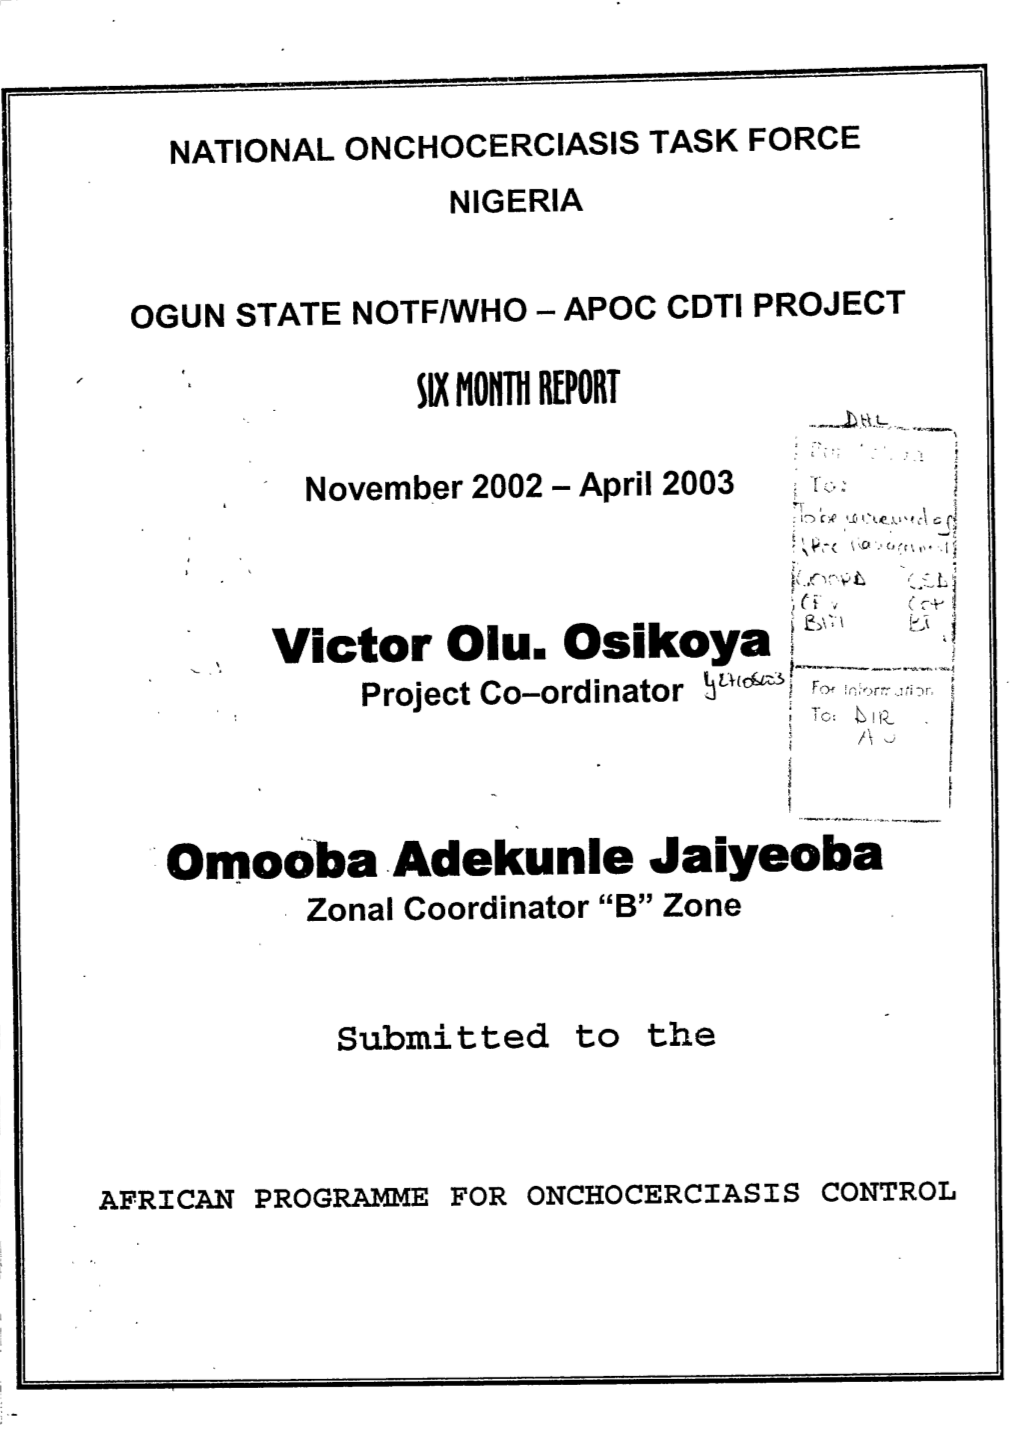 Victor Olu. Osikoya Project Go-Ordinator Lrttcras F,Y Ie I.-Rr;'." .-: Ri Lr, ;," A'f,Rc: $ Lla R:'!, T\- Iq' Iali\: X)